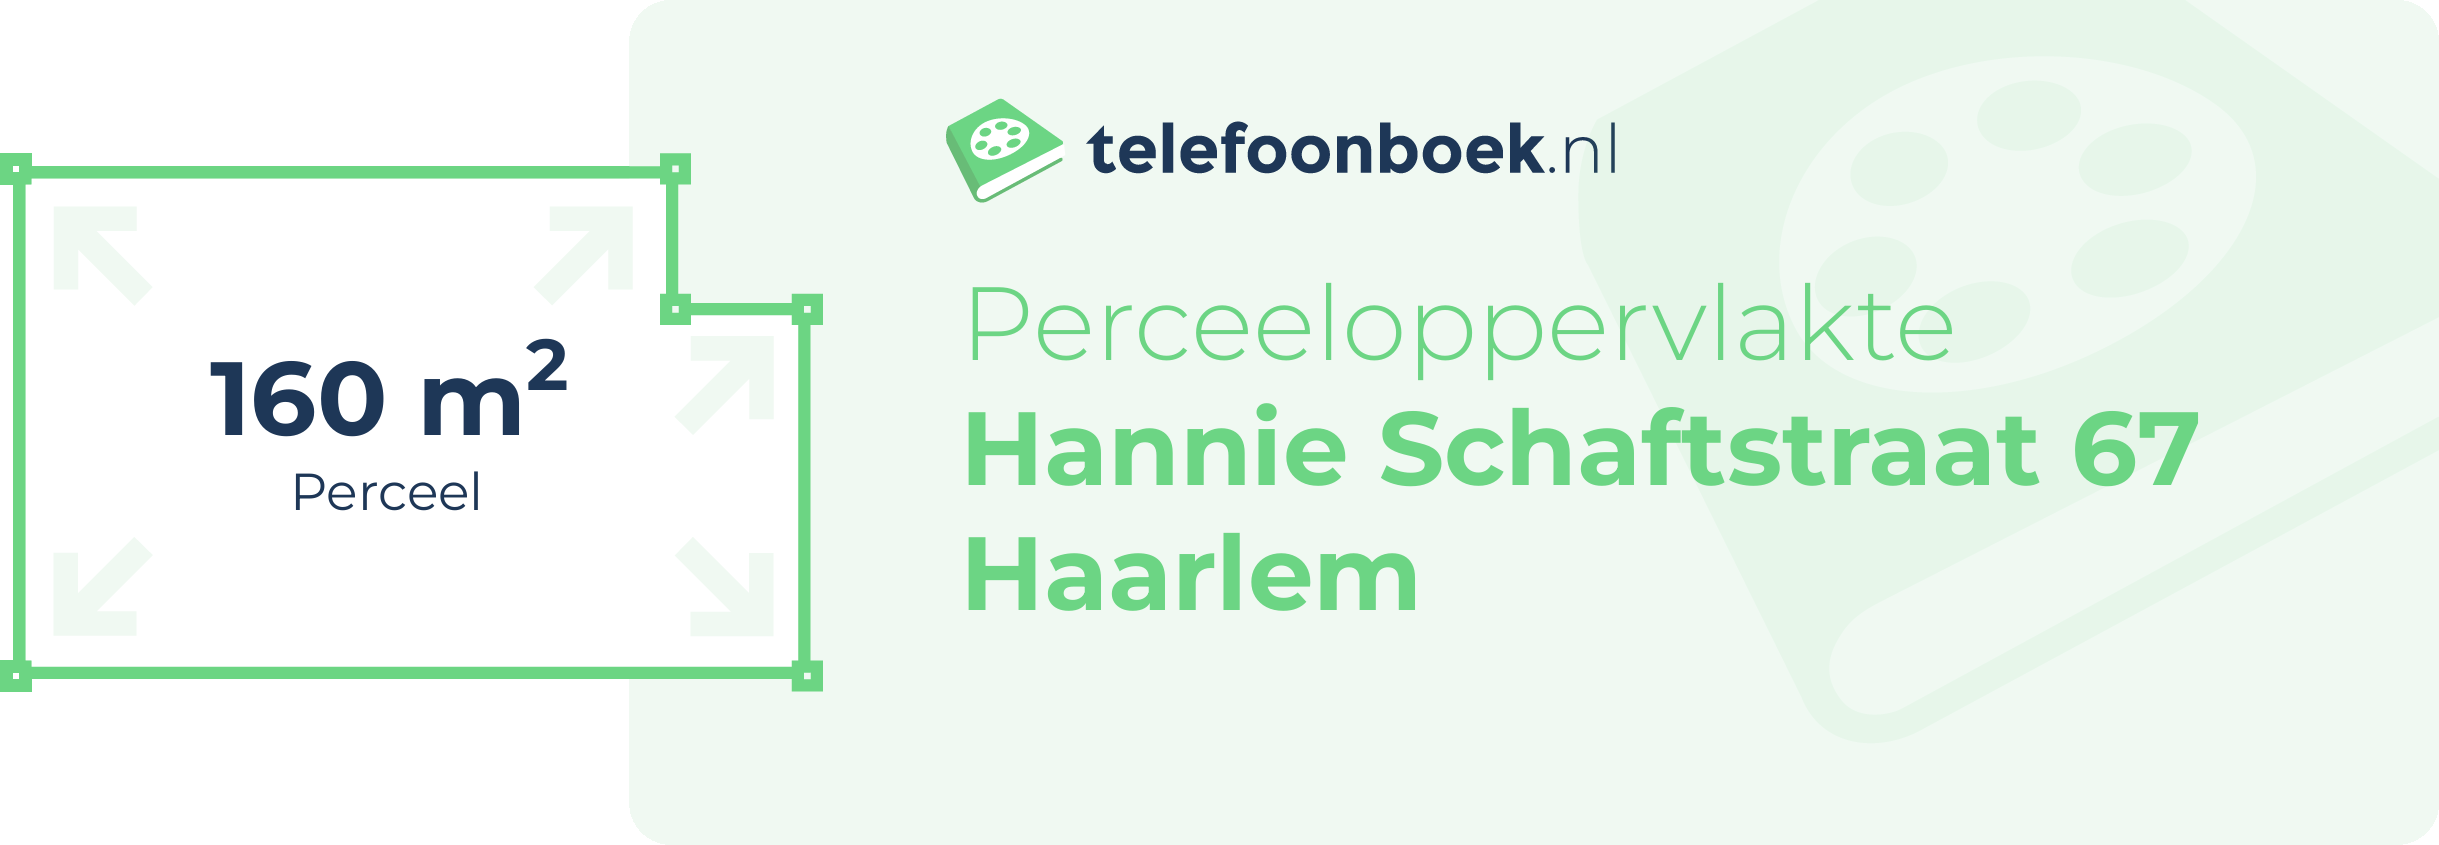 Perceeloppervlakte Hannie Schaftstraat 67 Haarlem